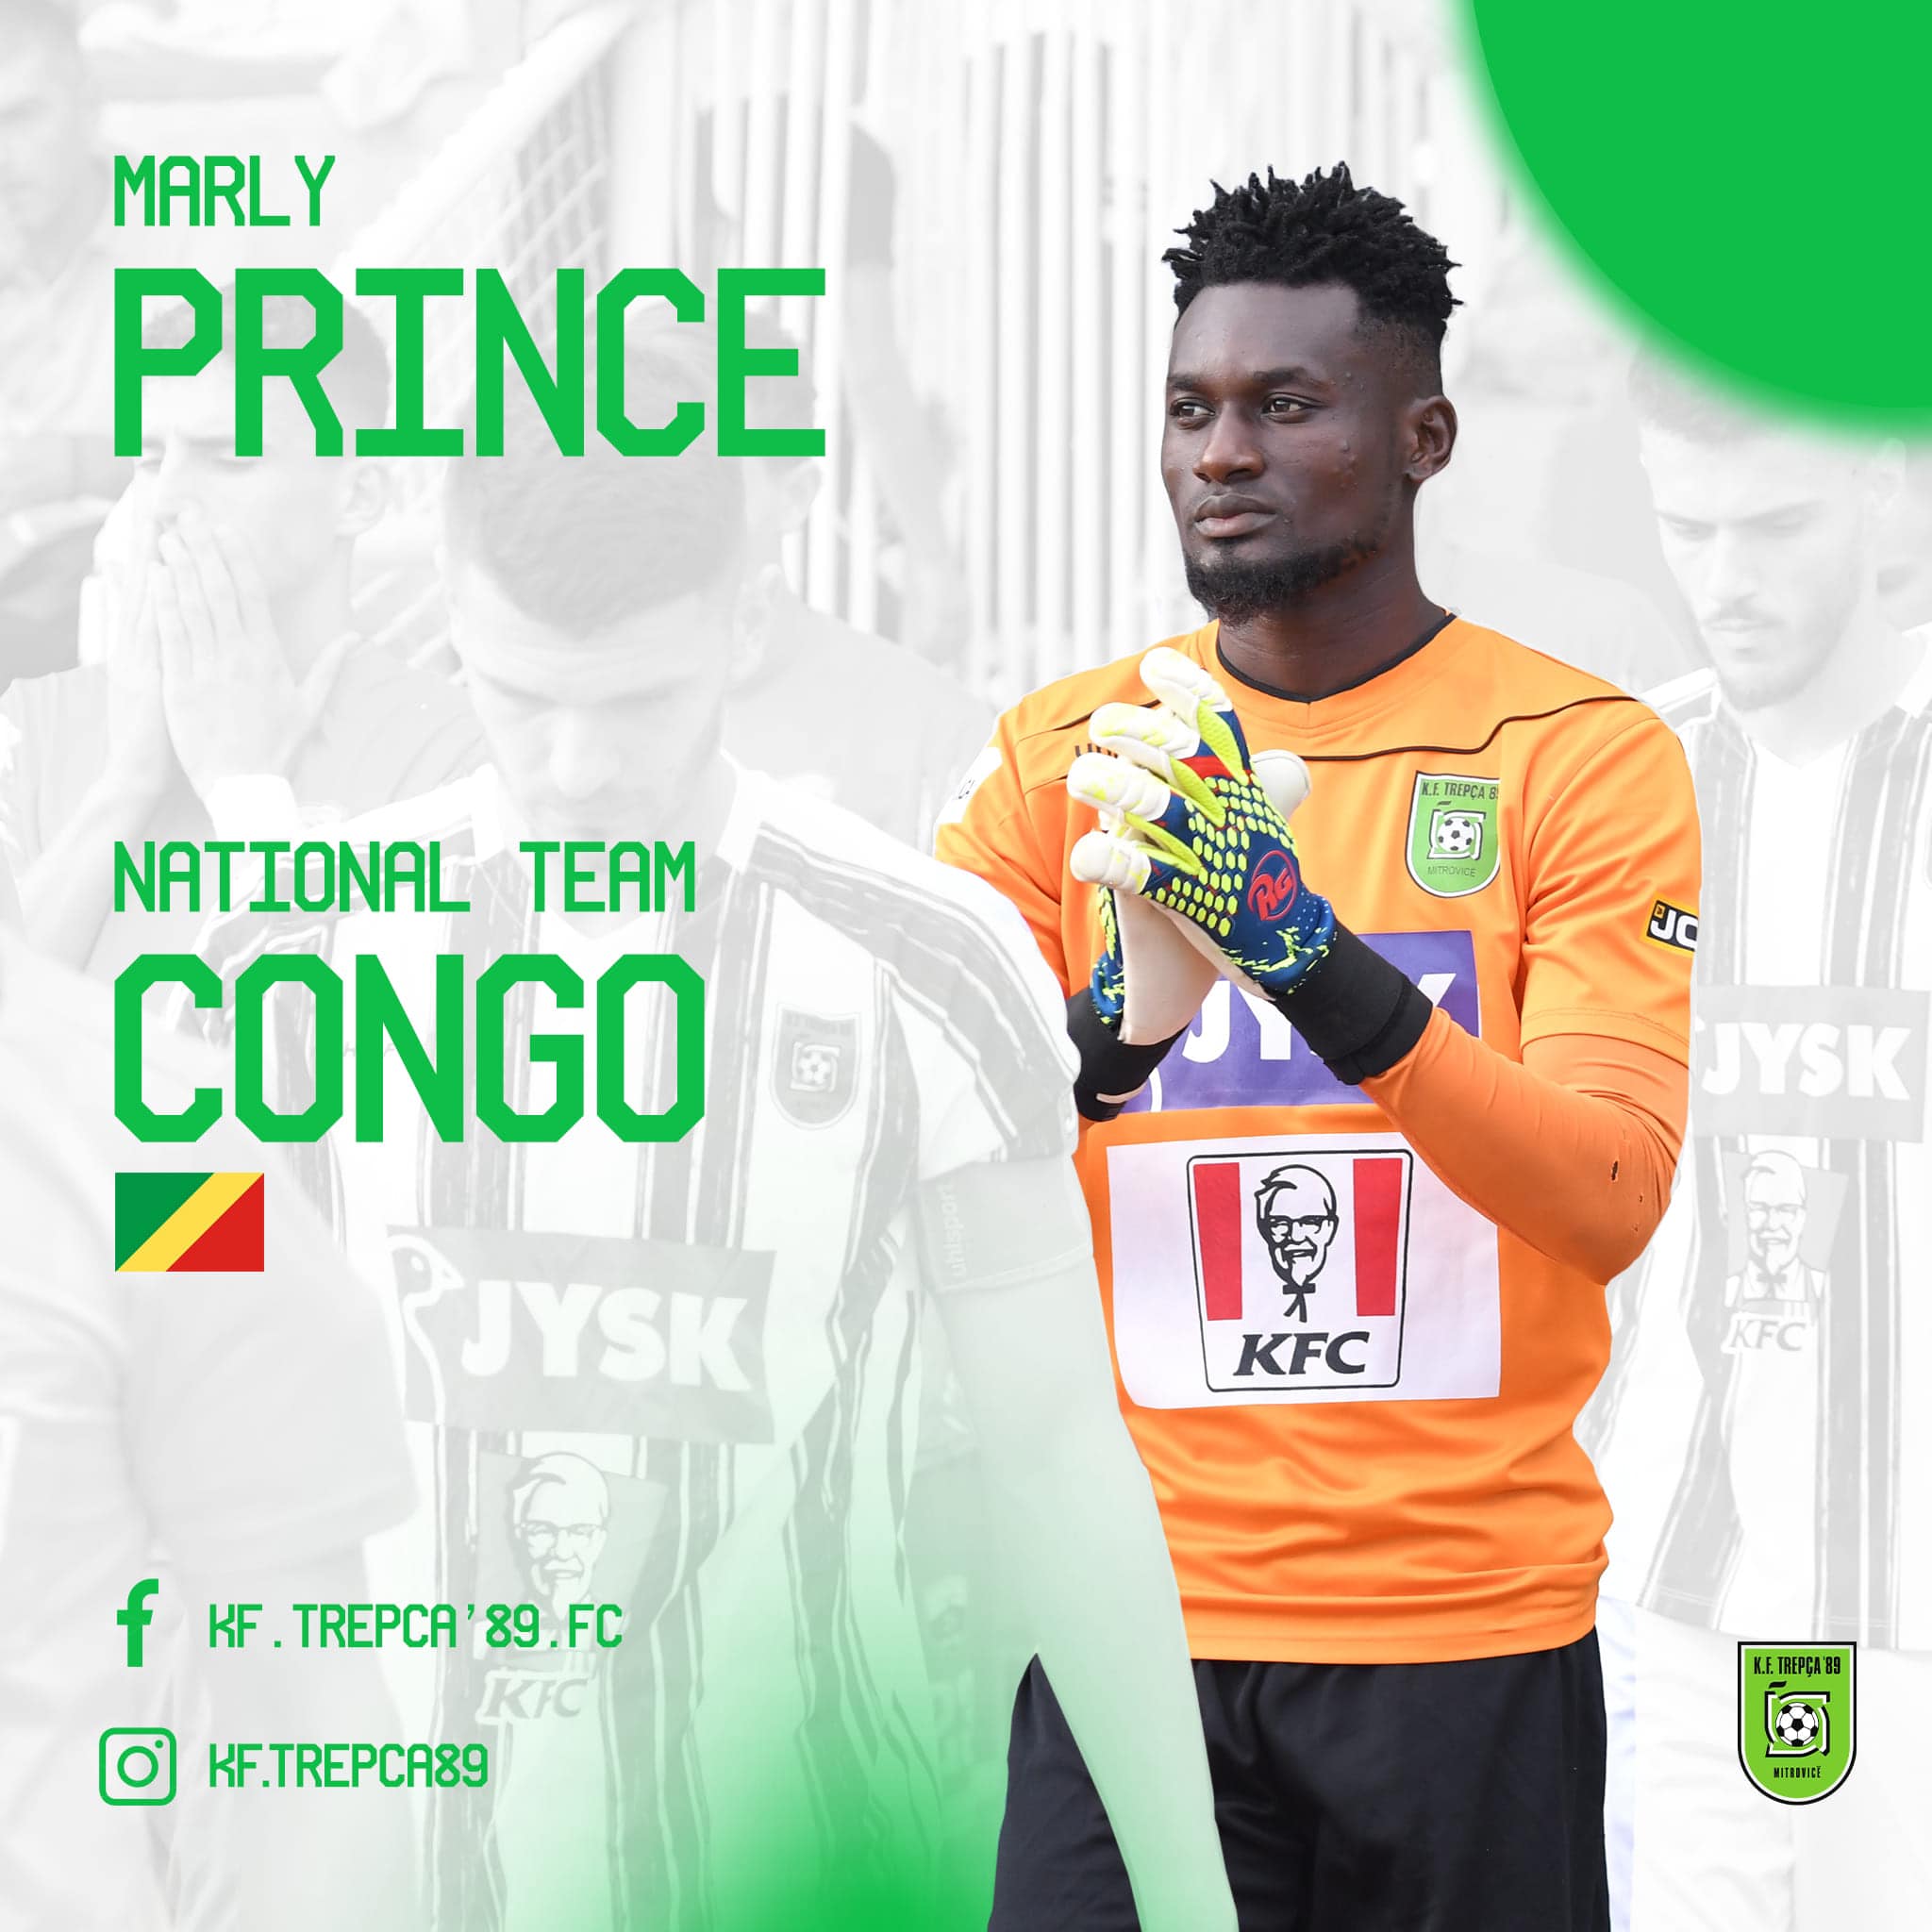 Prince Marly @ Trepca'89 to Congo